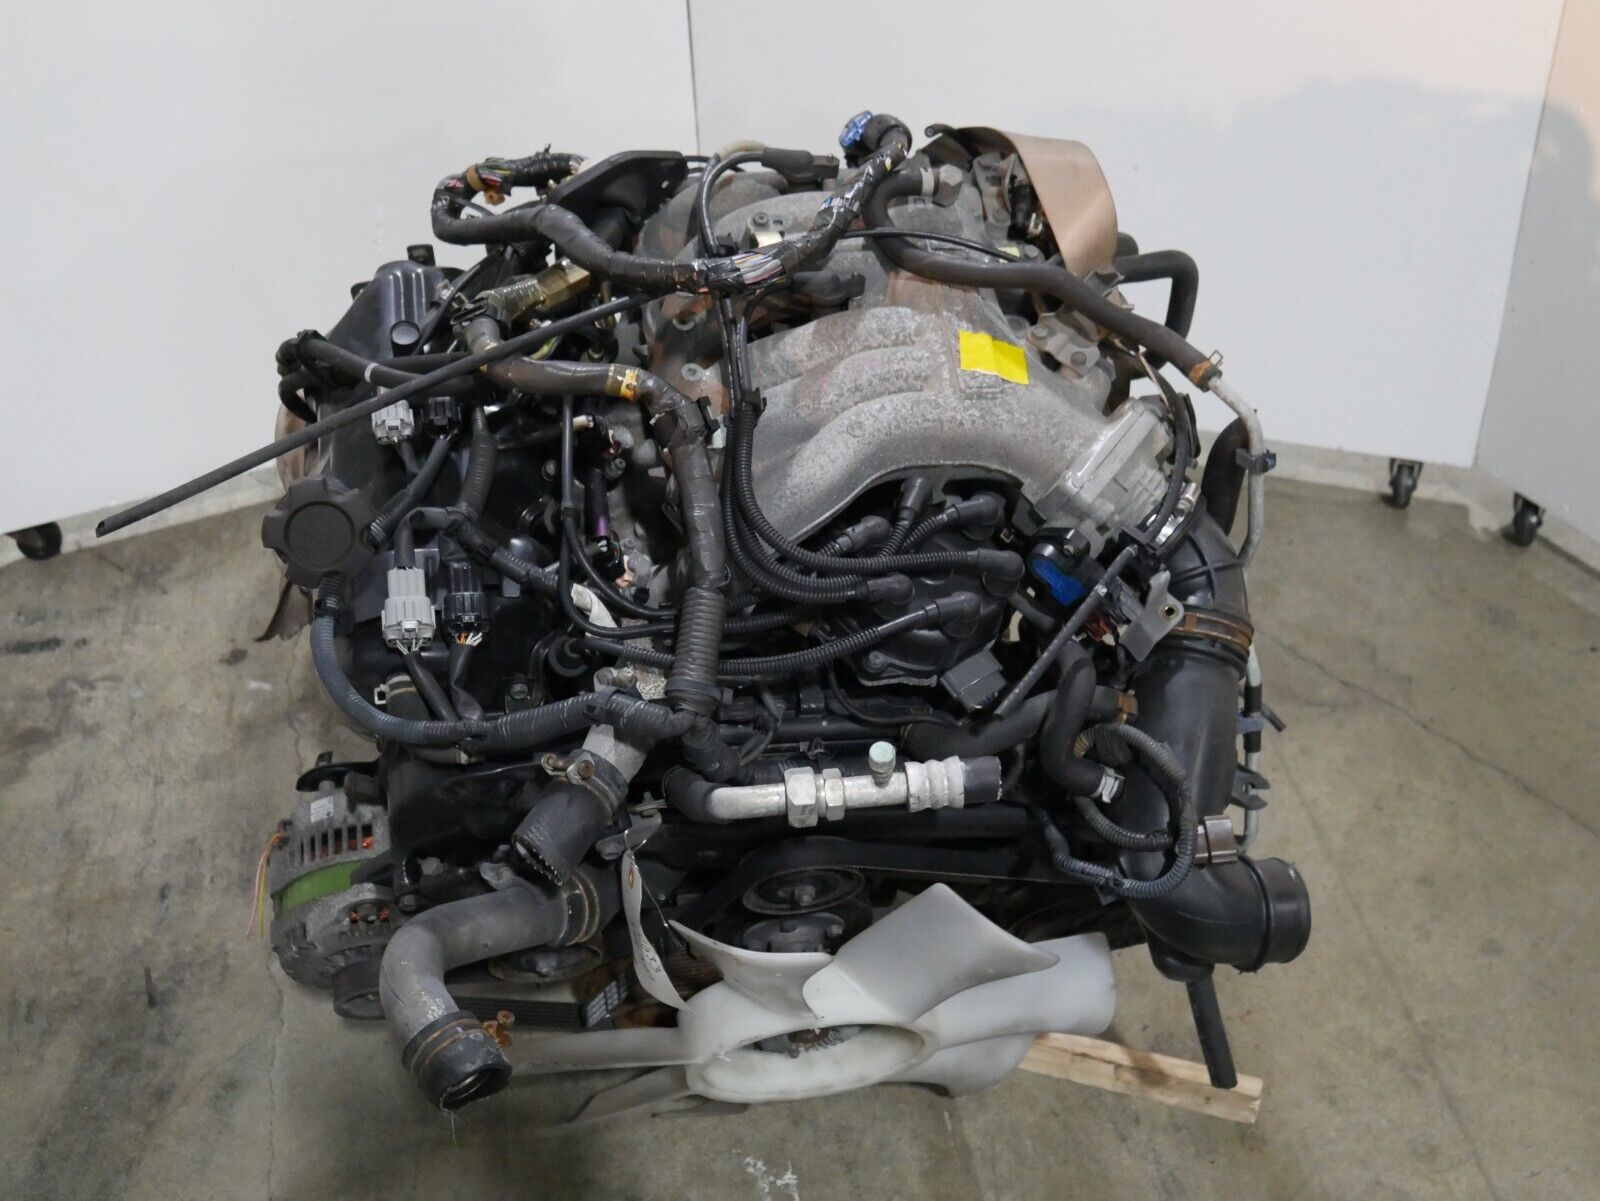 1996 1997 1998 1999 2000 Nissan Frontier Xterra Engine 3.3L 6cyl Motor JDM VG33E